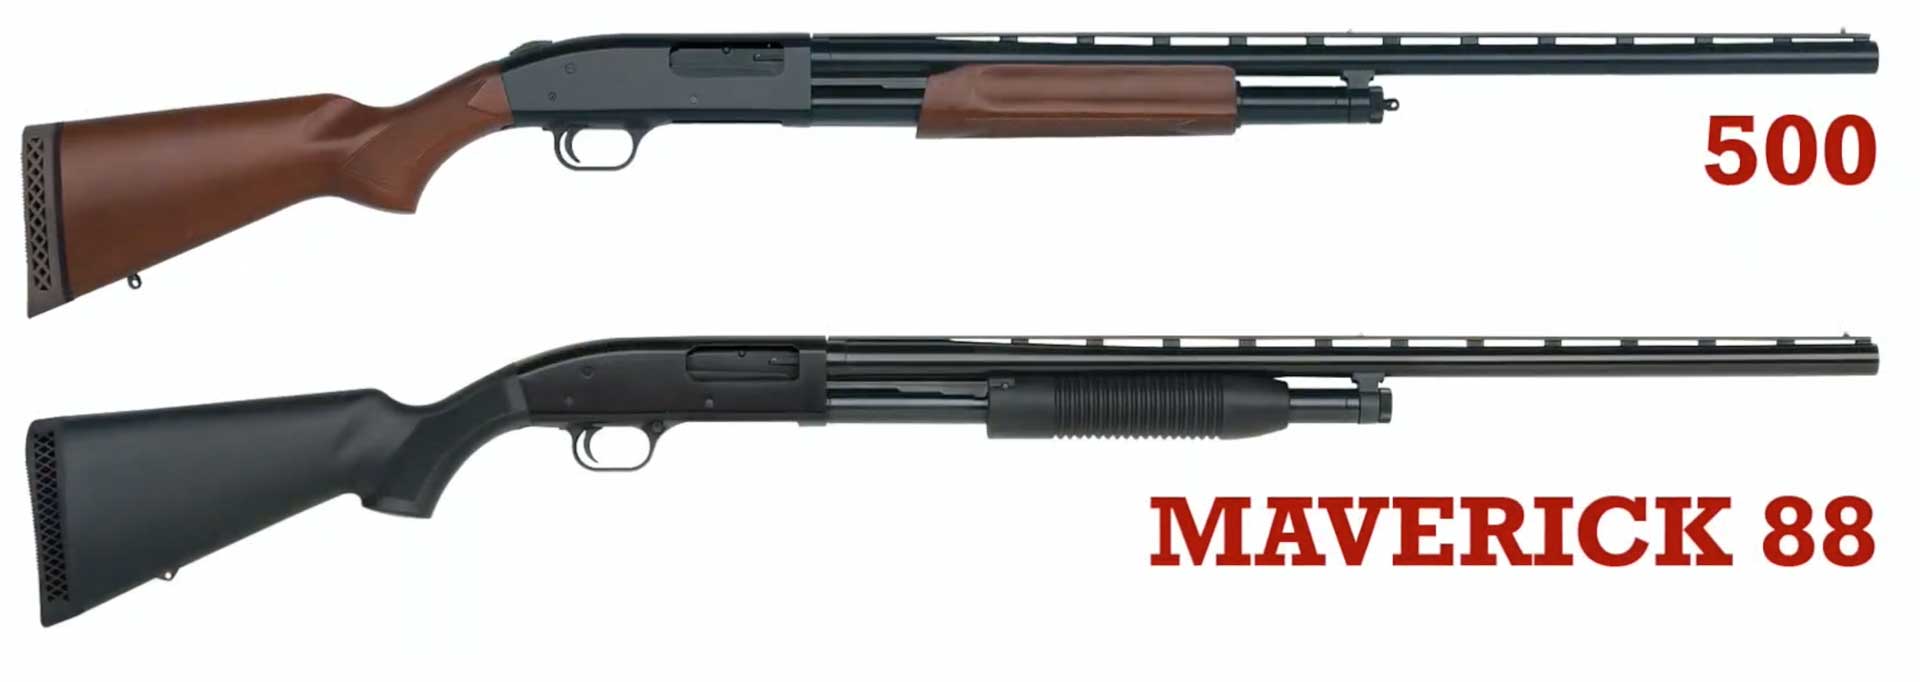 right side pump-action shotguns stack two guns black metal plastic brown wood